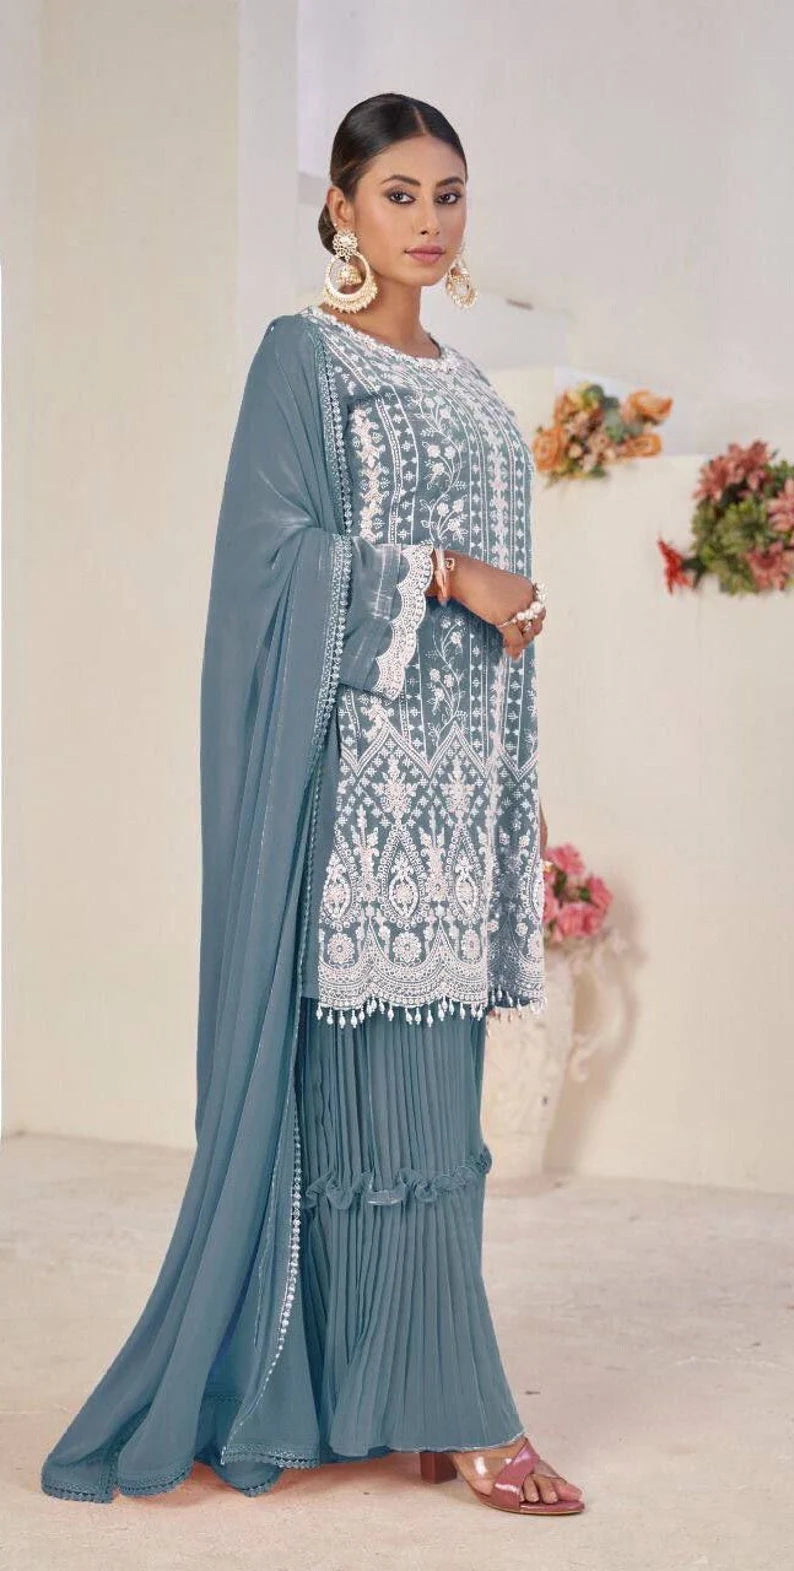 Blue Wine Palazza Suit Indian Designer Salwar Suit Ready to Wear Salwar Kameez Lehenga Suit Wedding Sharara Readymade Partywear Kameez Suit